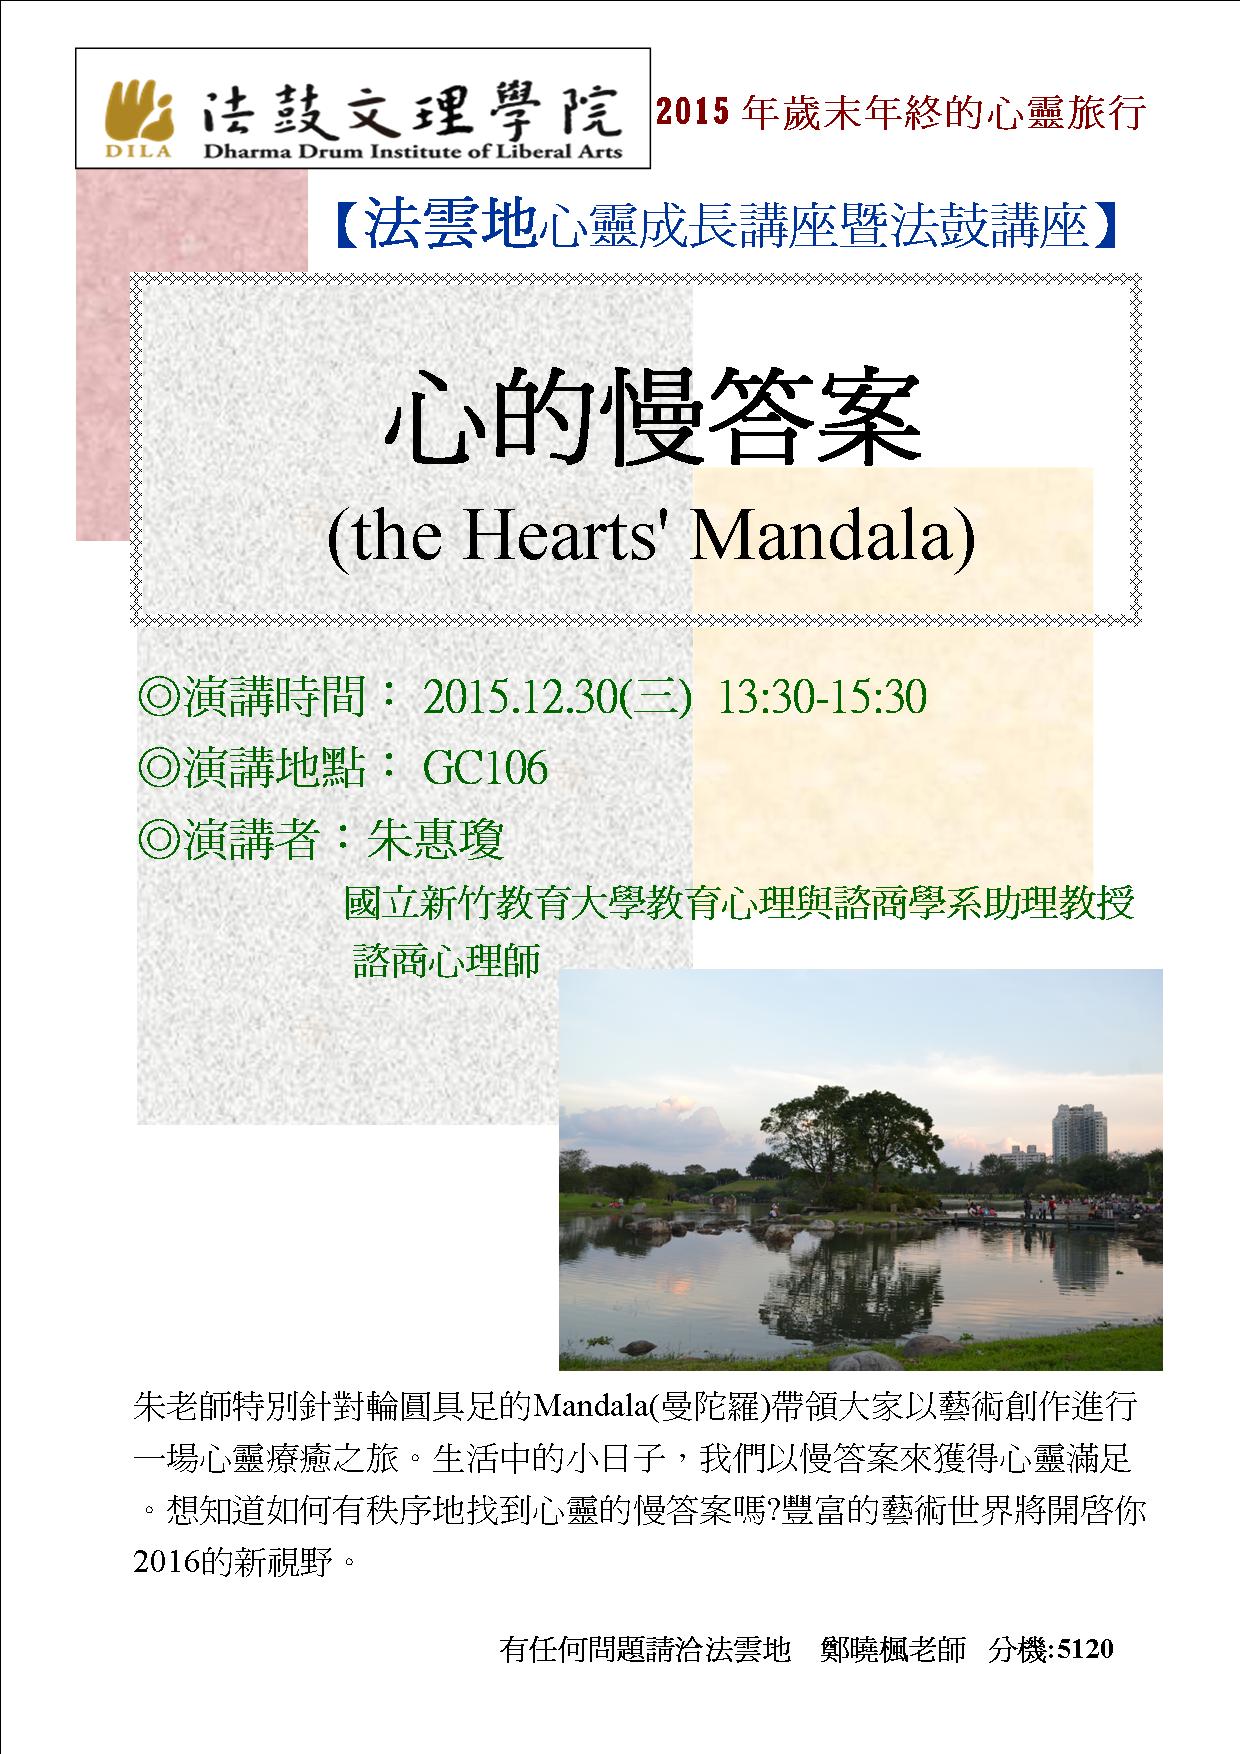 the Hearts' Mandala